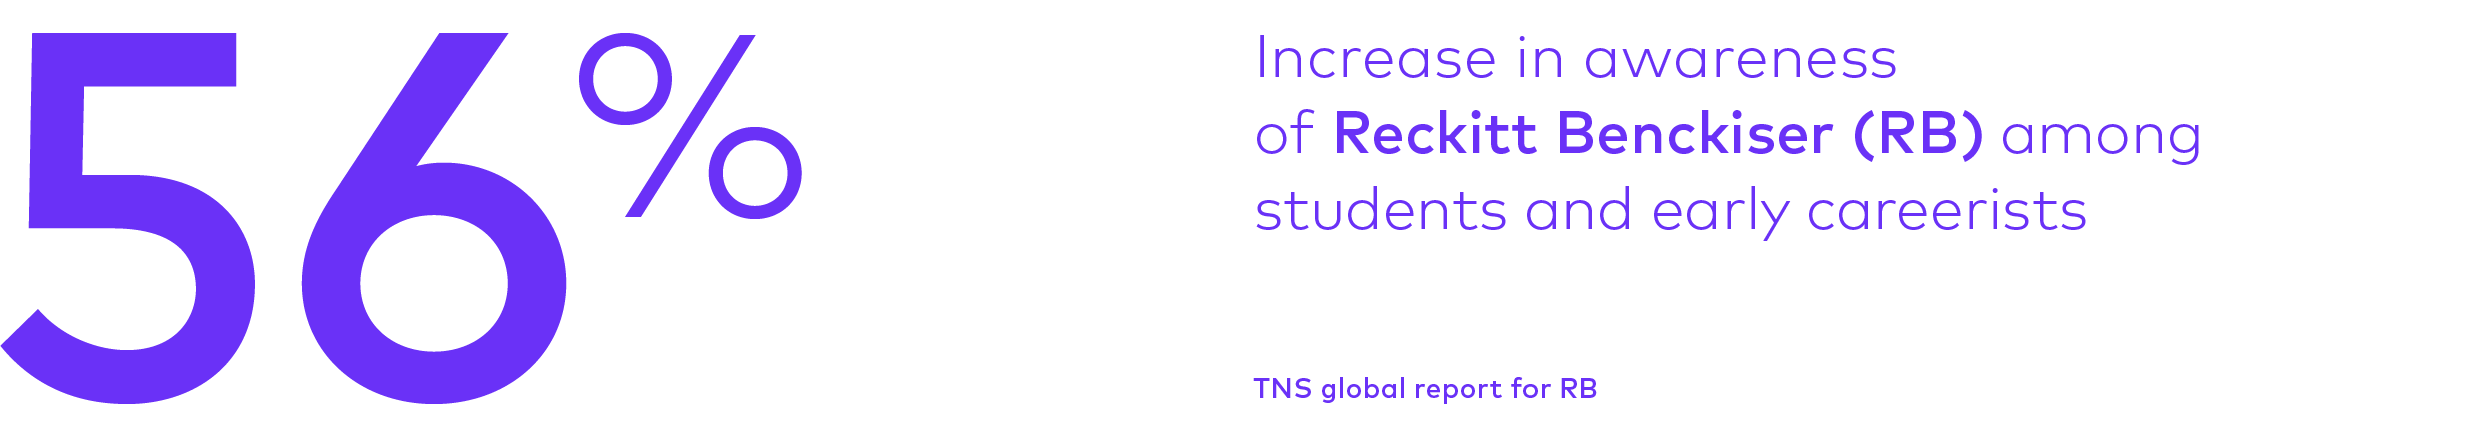 RB student awareness 56% increase